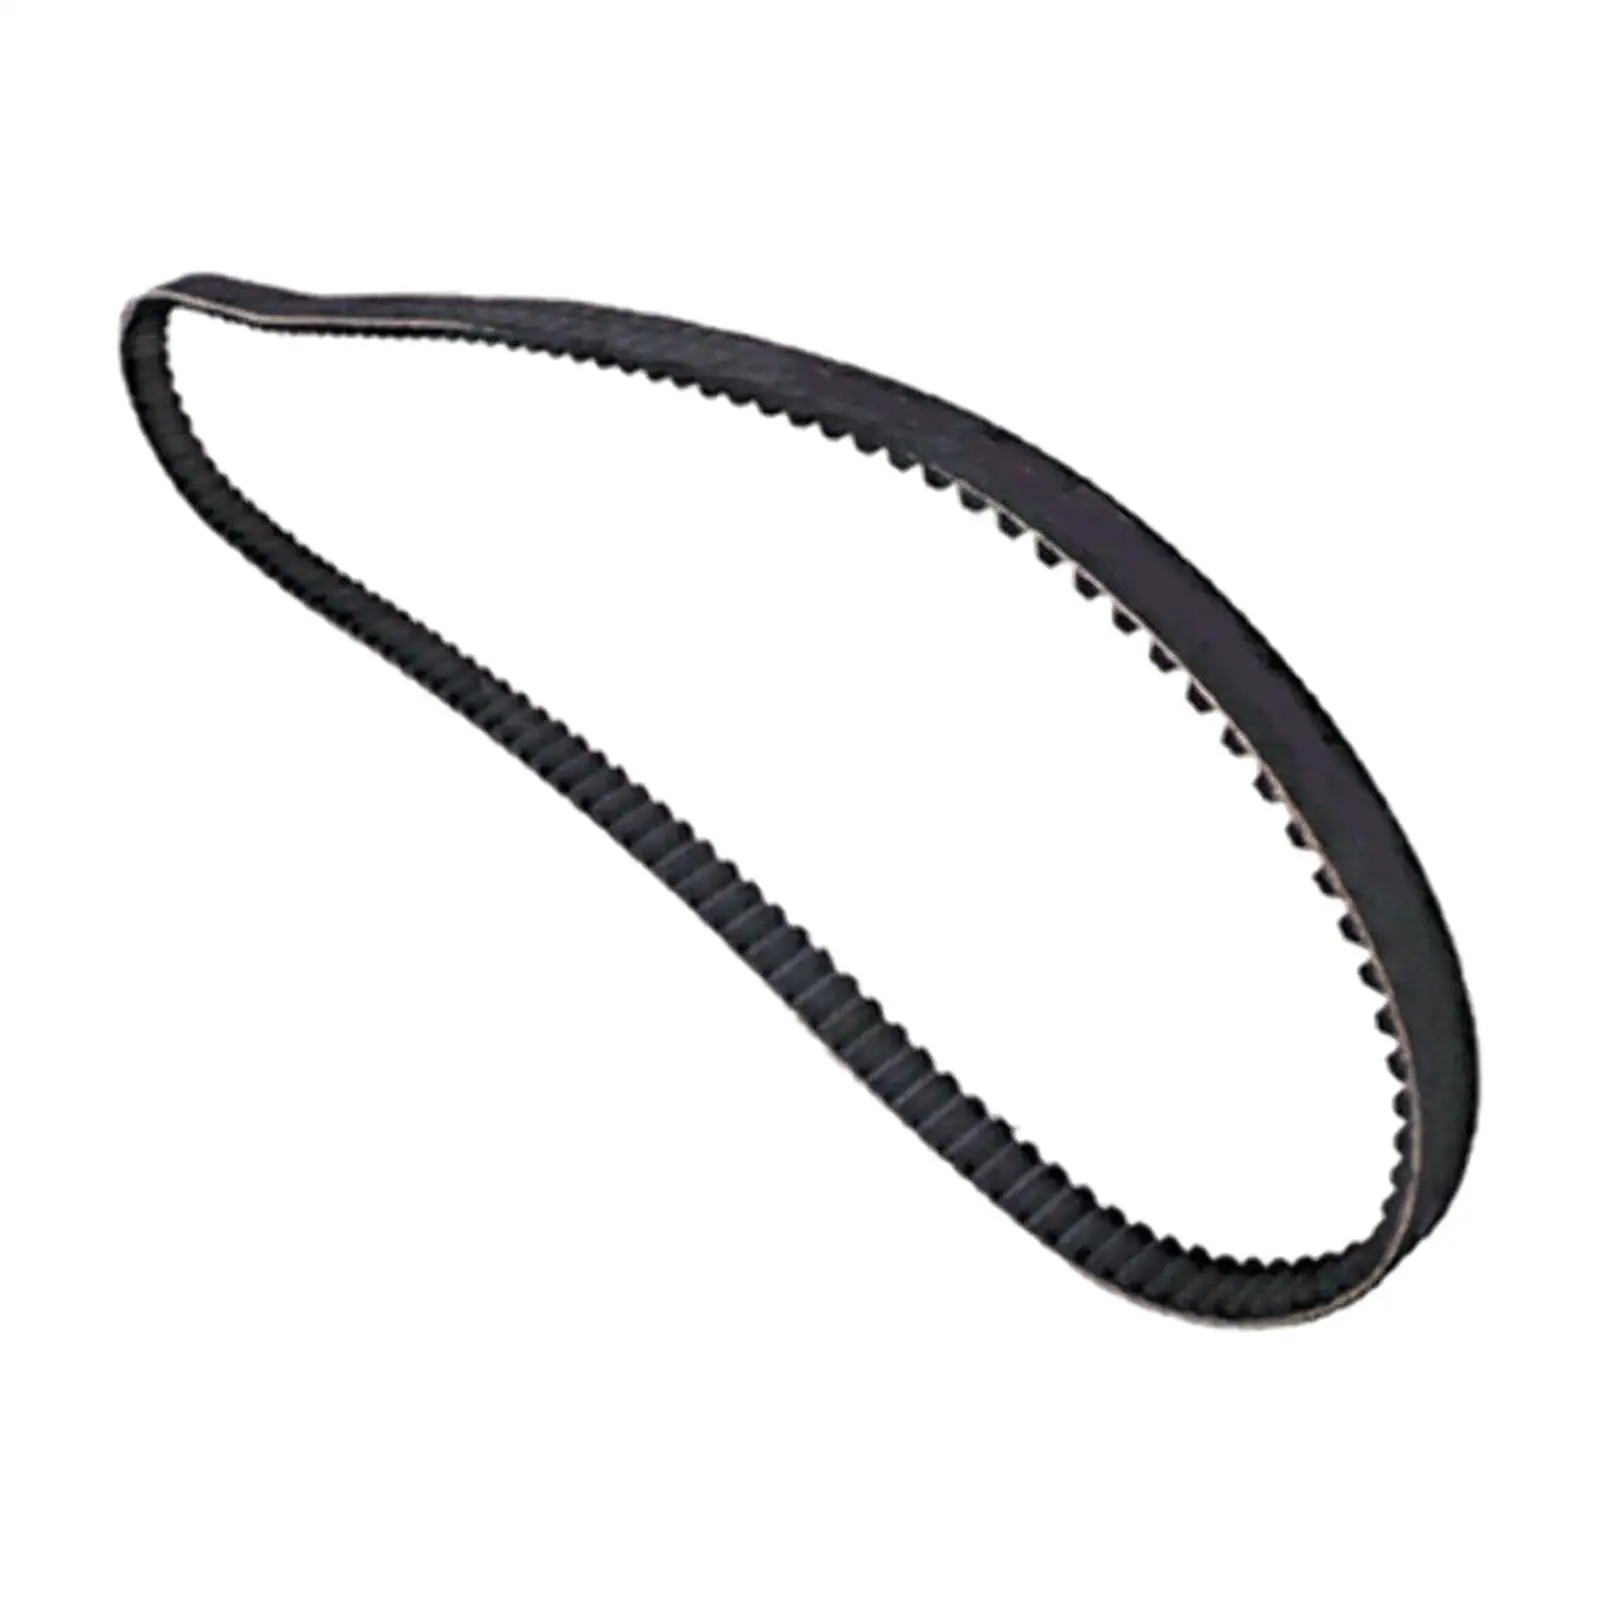 Rear Drive Belt Motorcycle Accessories Rubber 40015-00 133T 1 1/8